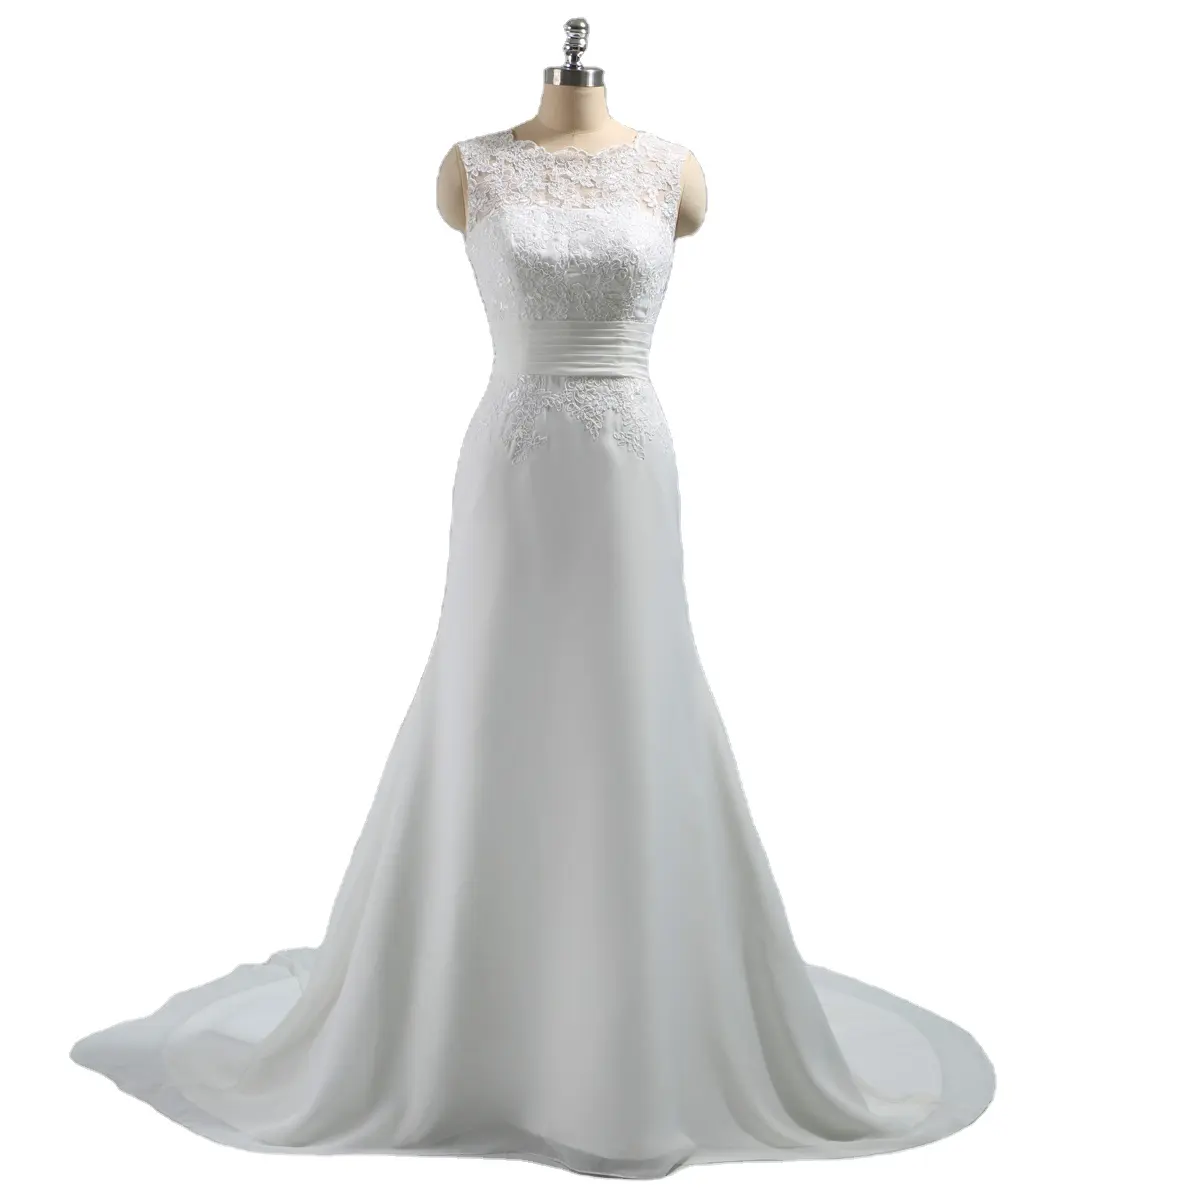 Ivory fit and flare chiffon wedding dresses